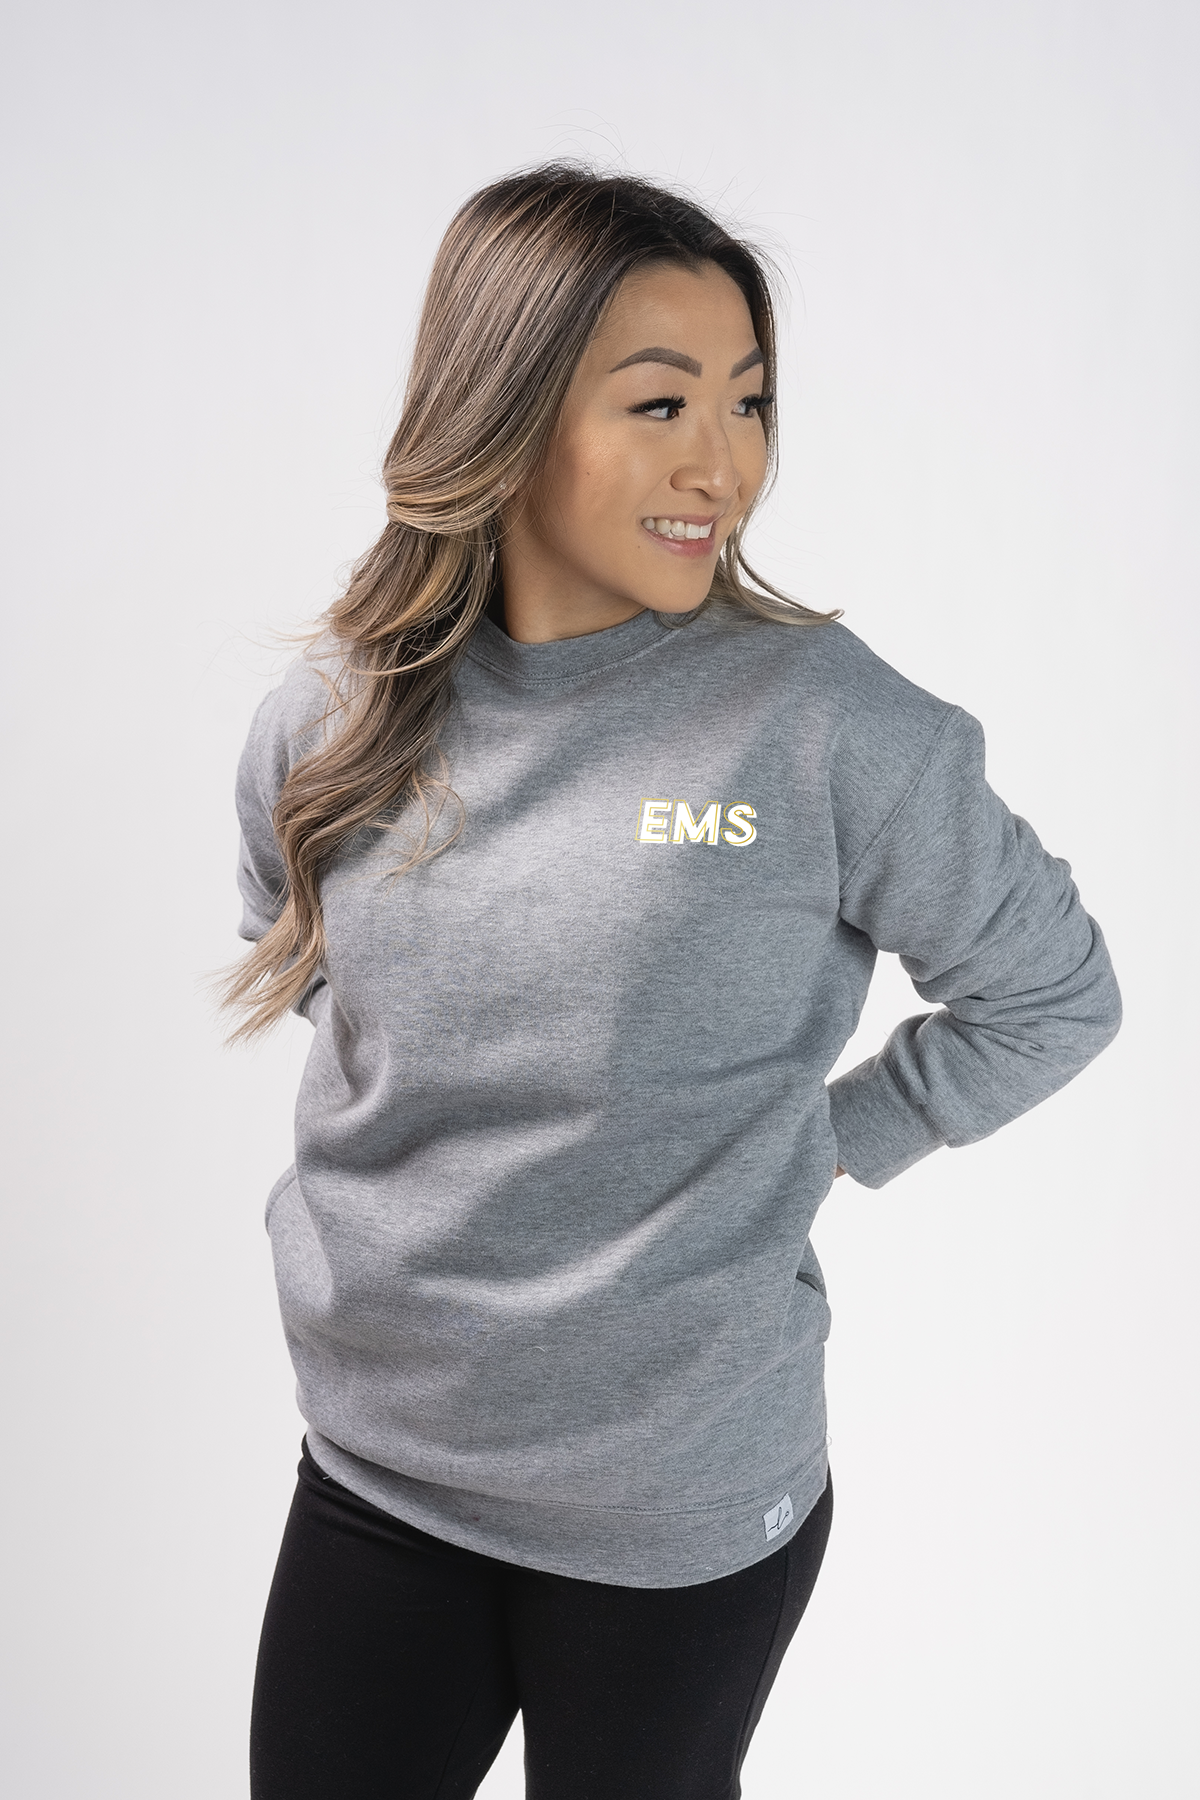 EMS Creds - Pocketed Crew Sweatshirt